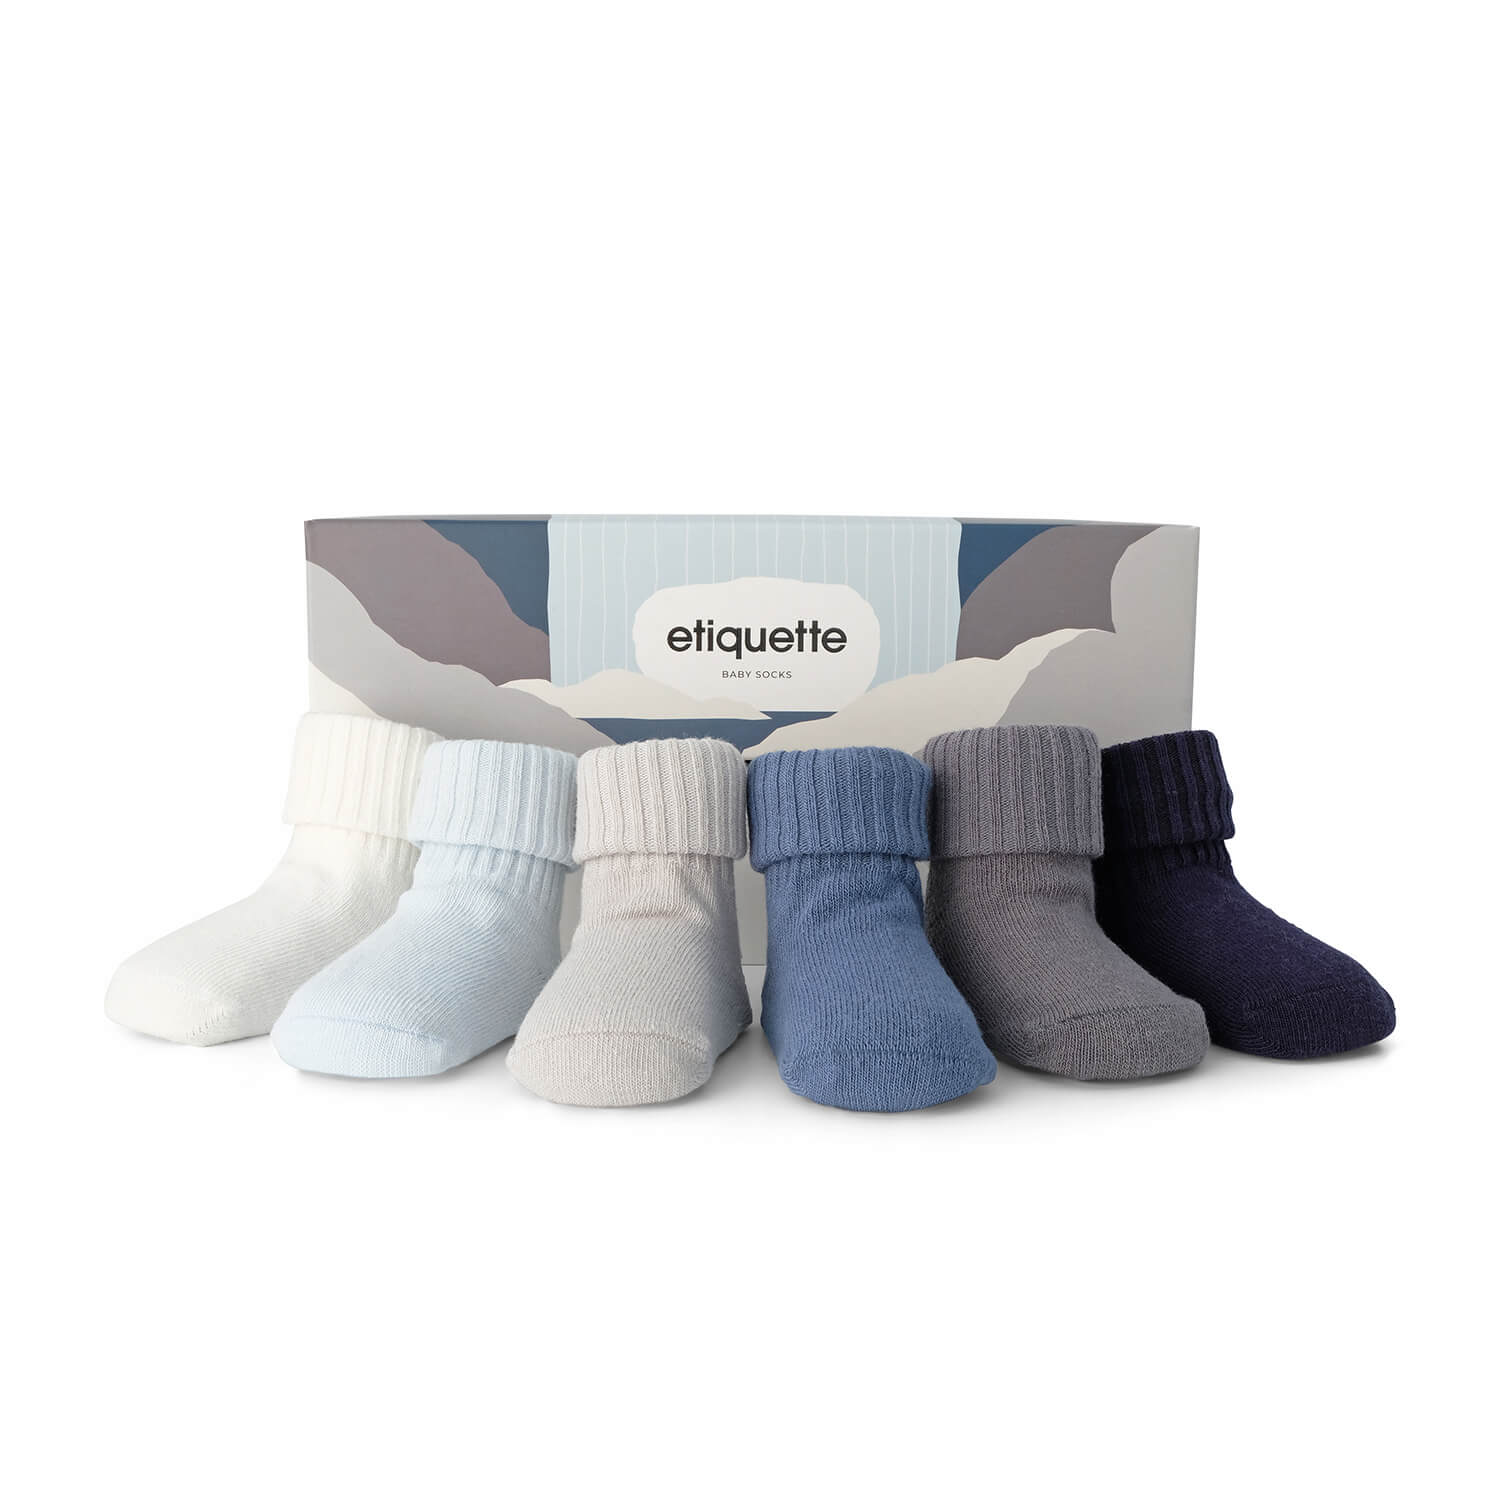 Organic Baby Socks - Waterfall Boy Baby Socks Gift Box for Baby Shower - blue grey ecru - main view⎪Lil'Etiquette Clothiers